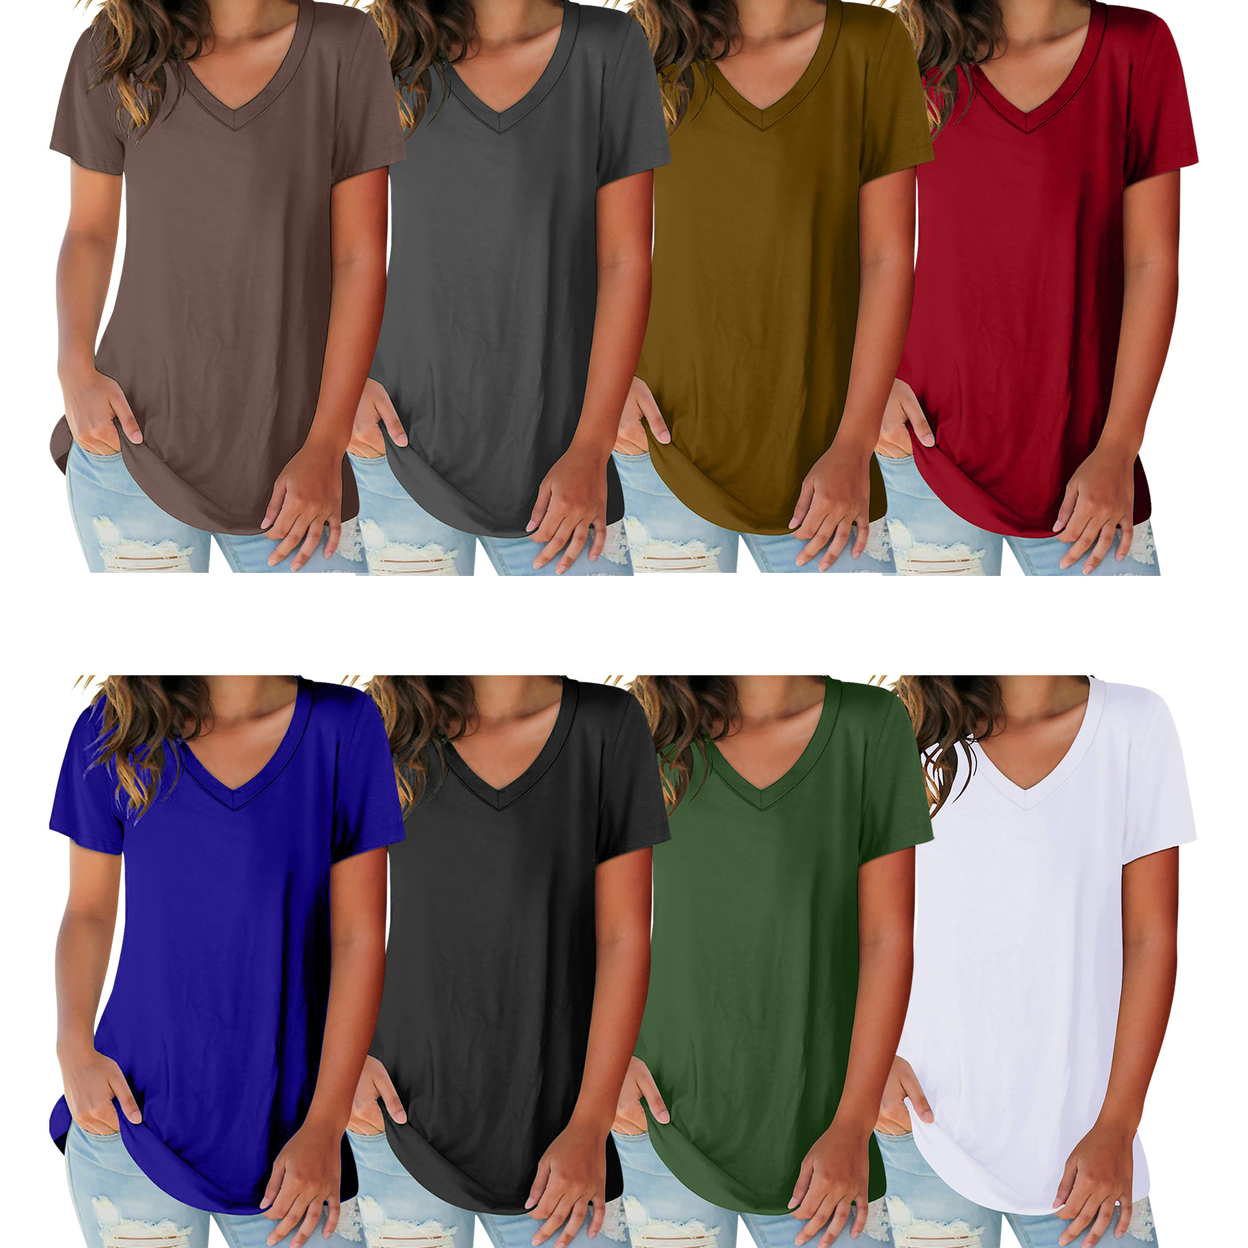 2-Pack: Women's Ultra Soft Smooth Cotton Blend Basic V-Neck Short Sleeve Shirts - Black & Navy, Medium